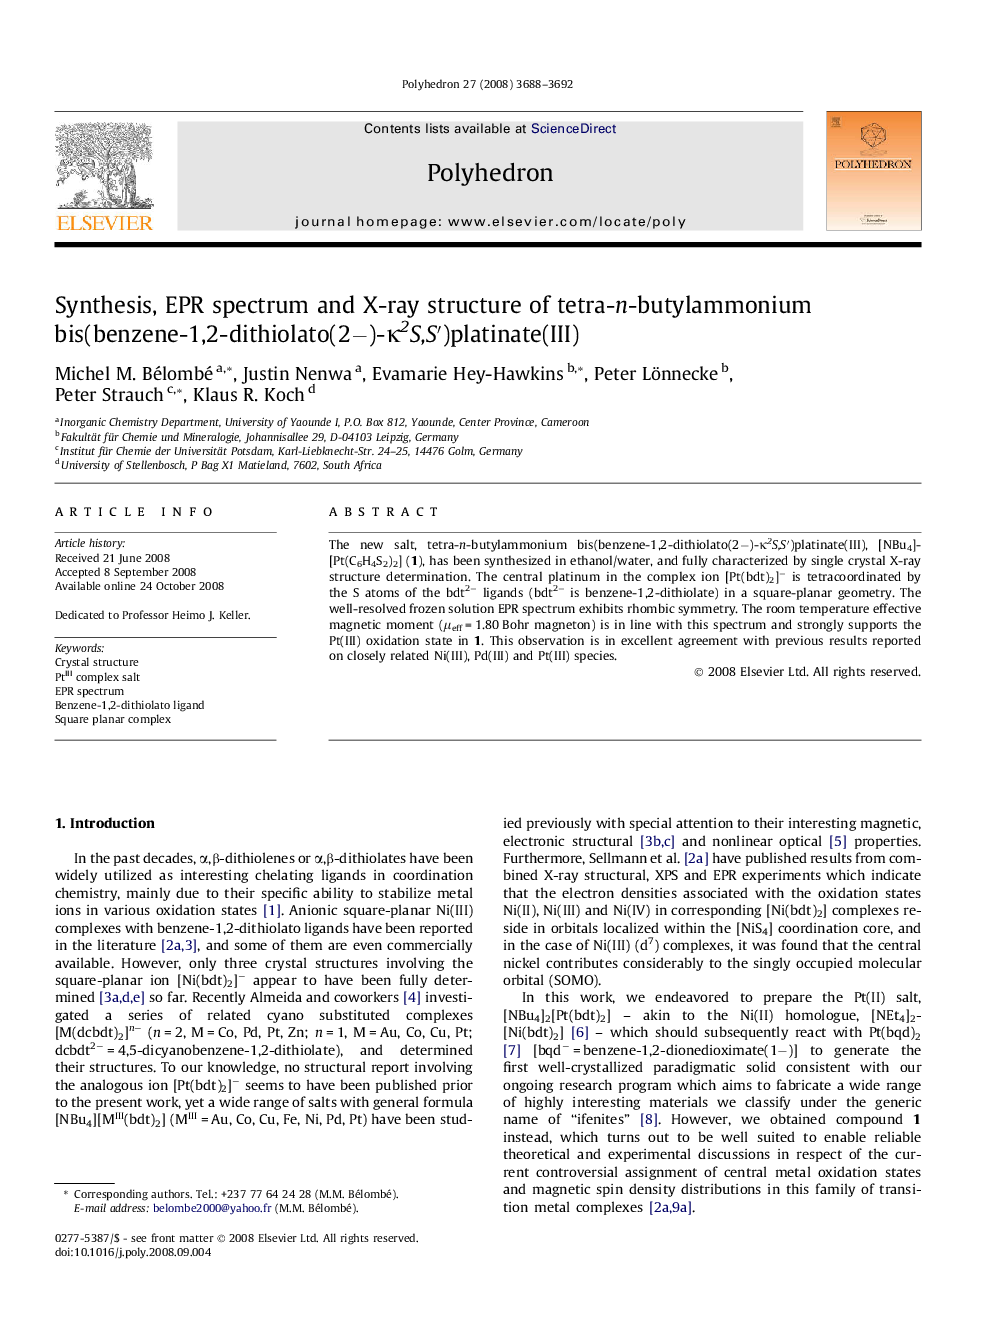 Synthesis, EPR spectrum and X-ray structure of tetra-n-butylammonium bis(benzene-1,2-dithiolato(2−)-κ2S,S′)platinate(III)